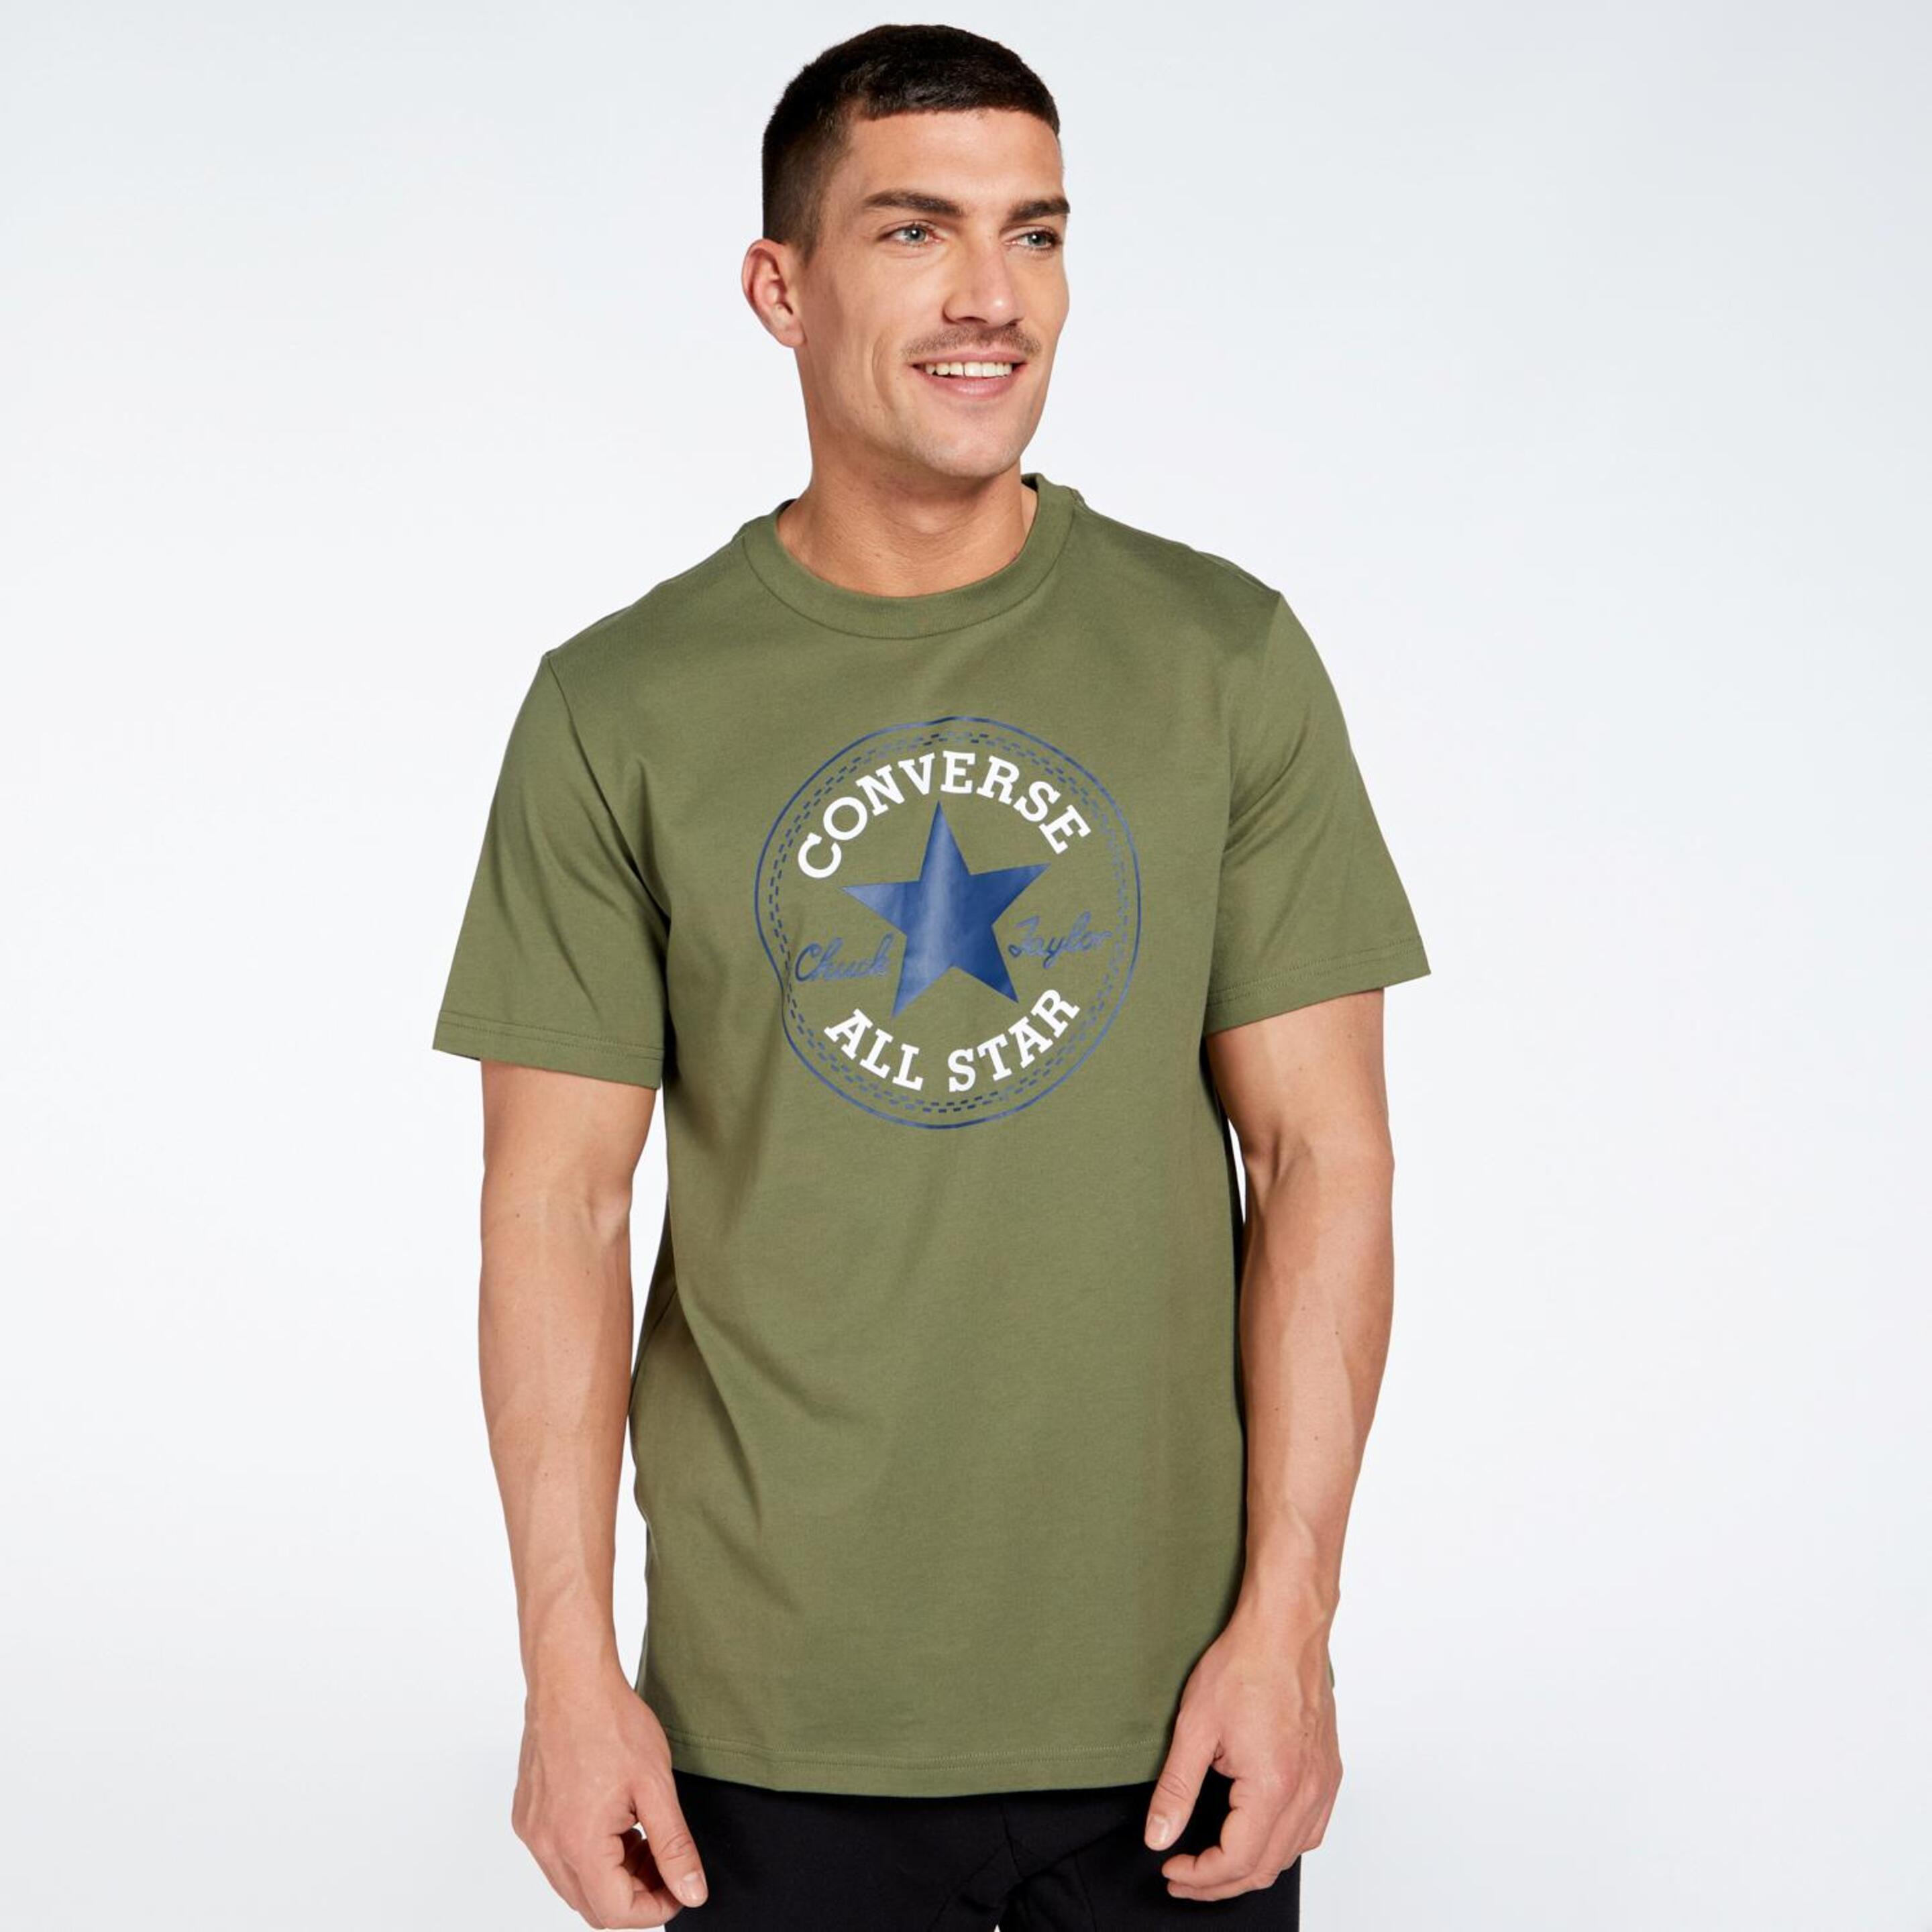 Converse All Star - verde - Camiseta Hombre